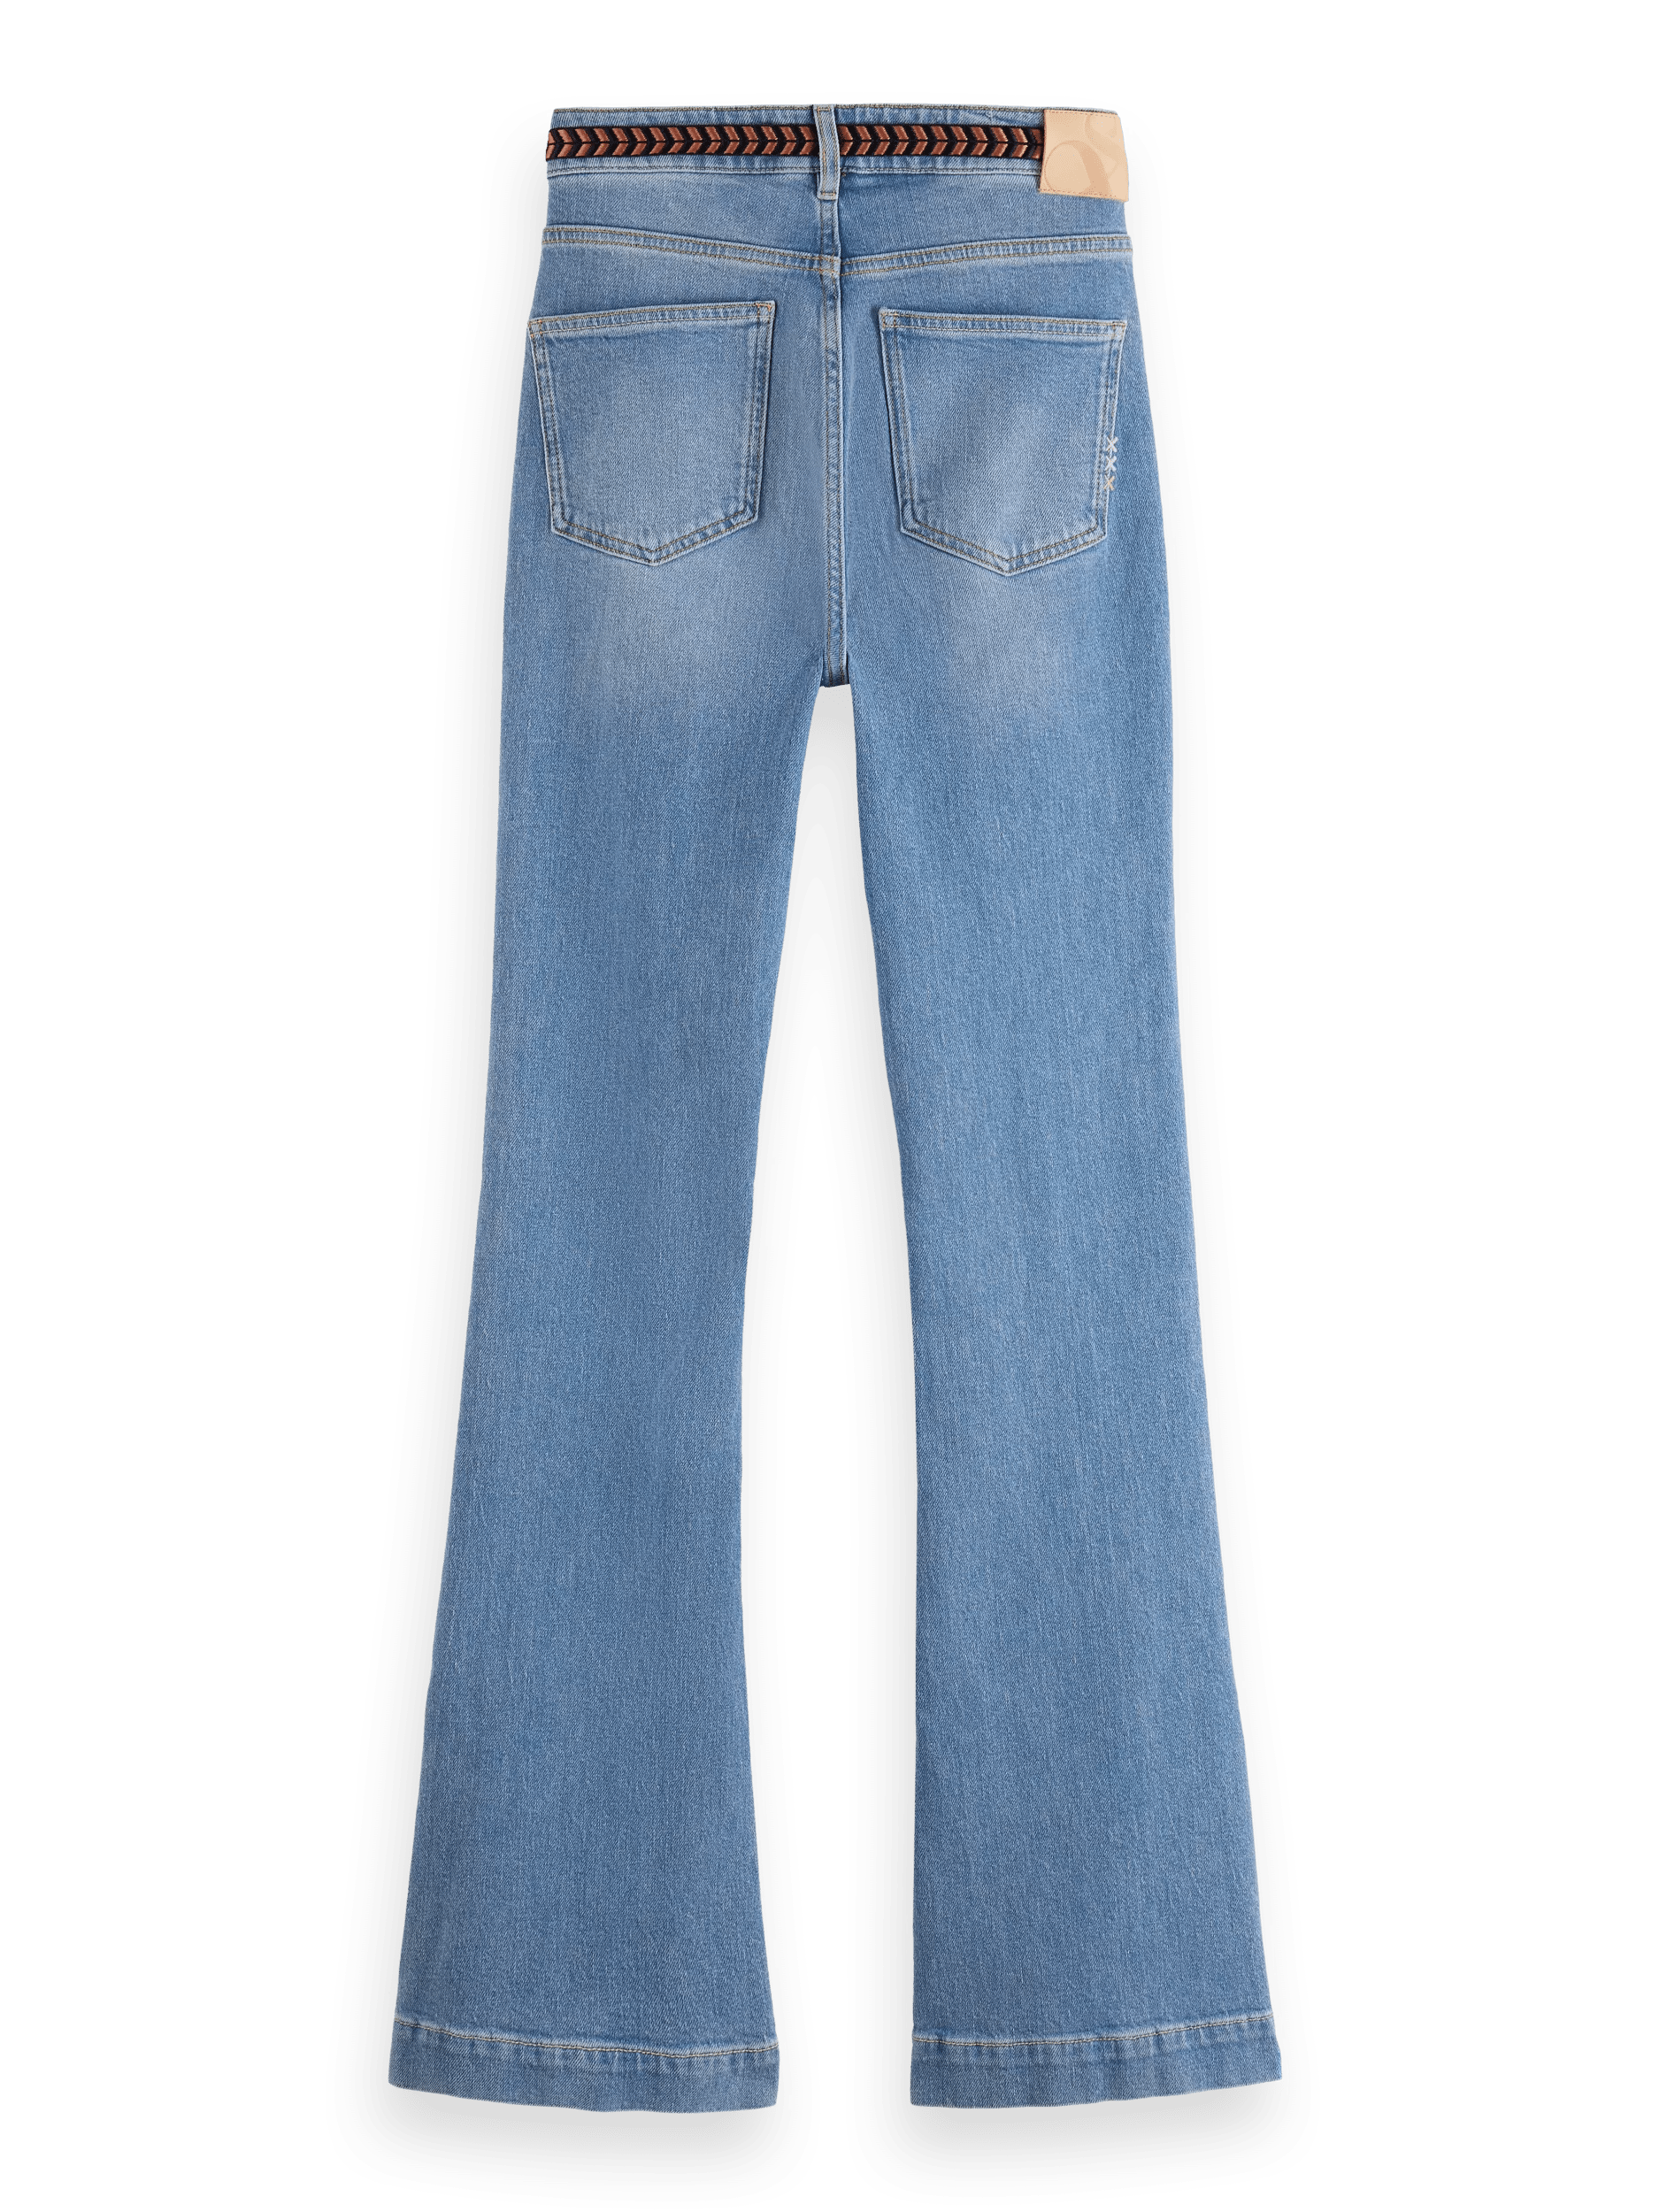 Scotch & Soda The Charm high-rise classic flared jeans BCK